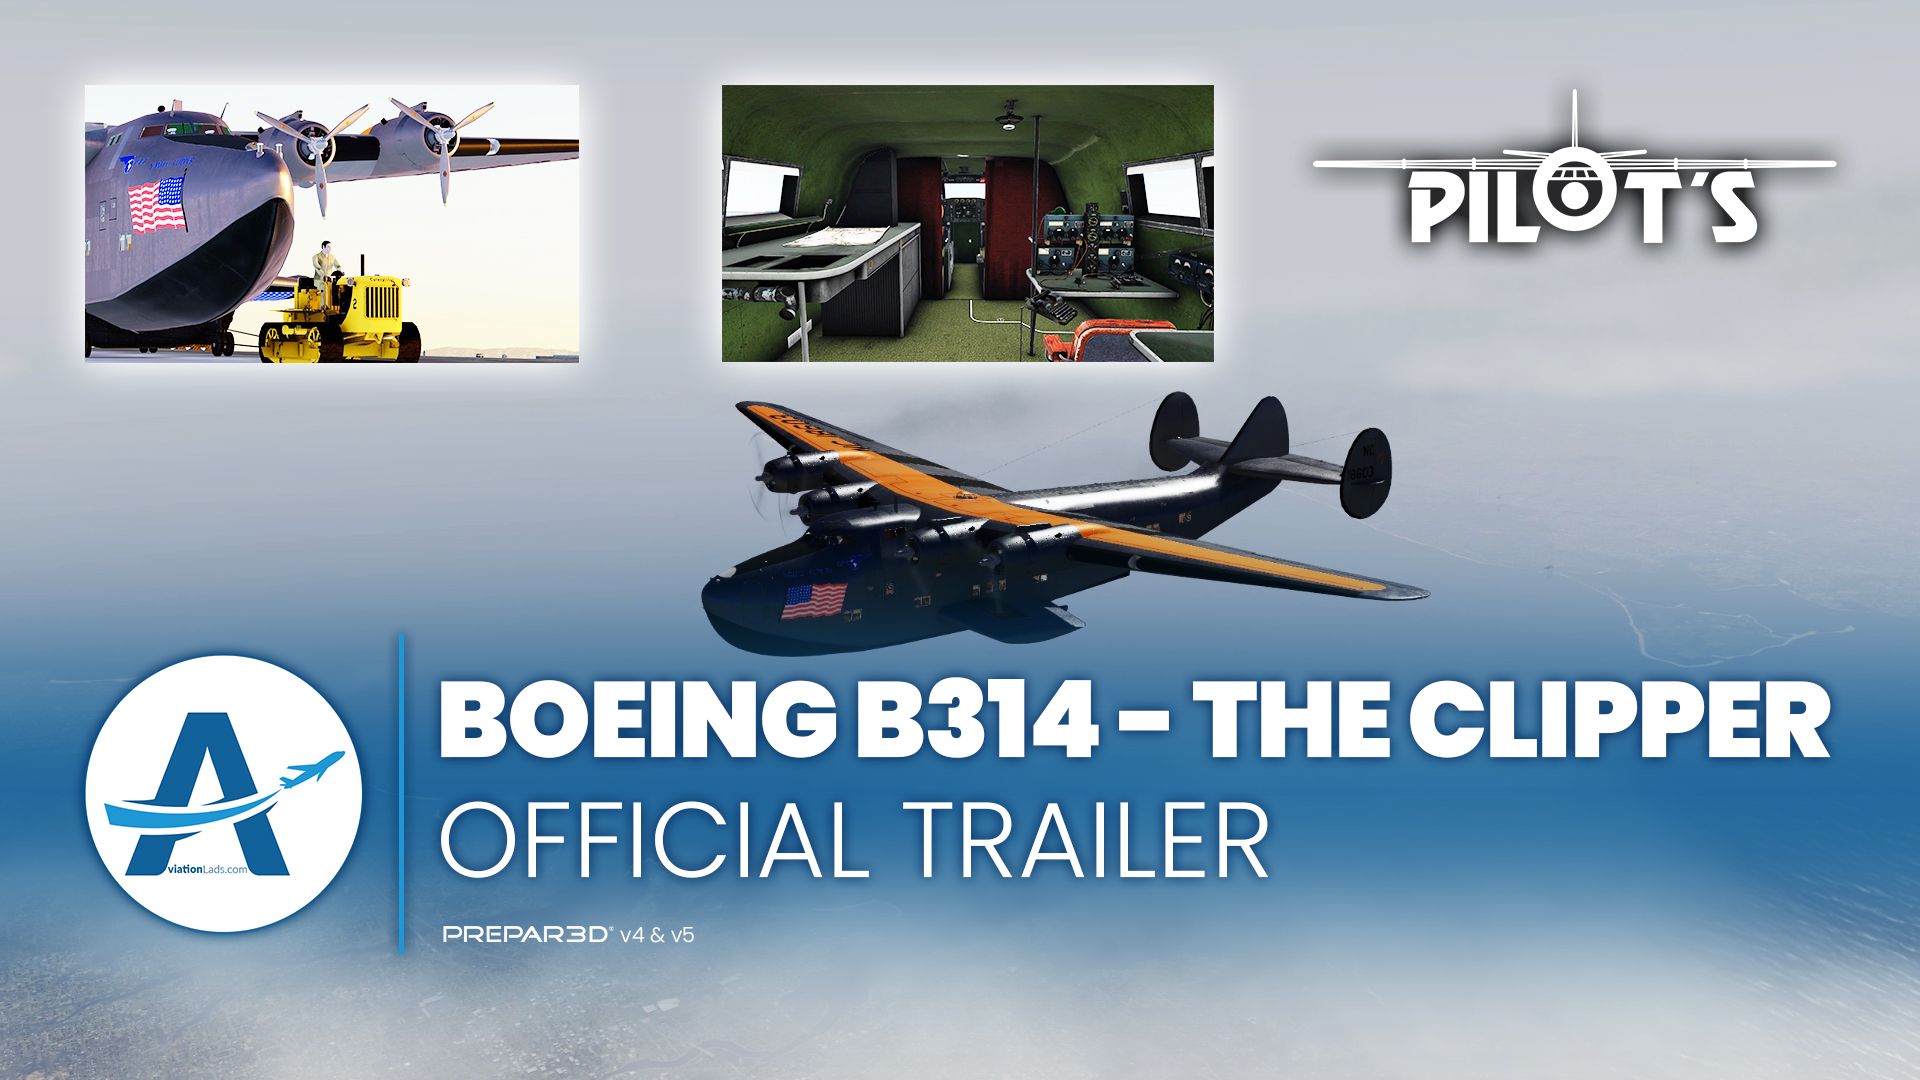 [TRAILER] PILOT’S – Boeing B314